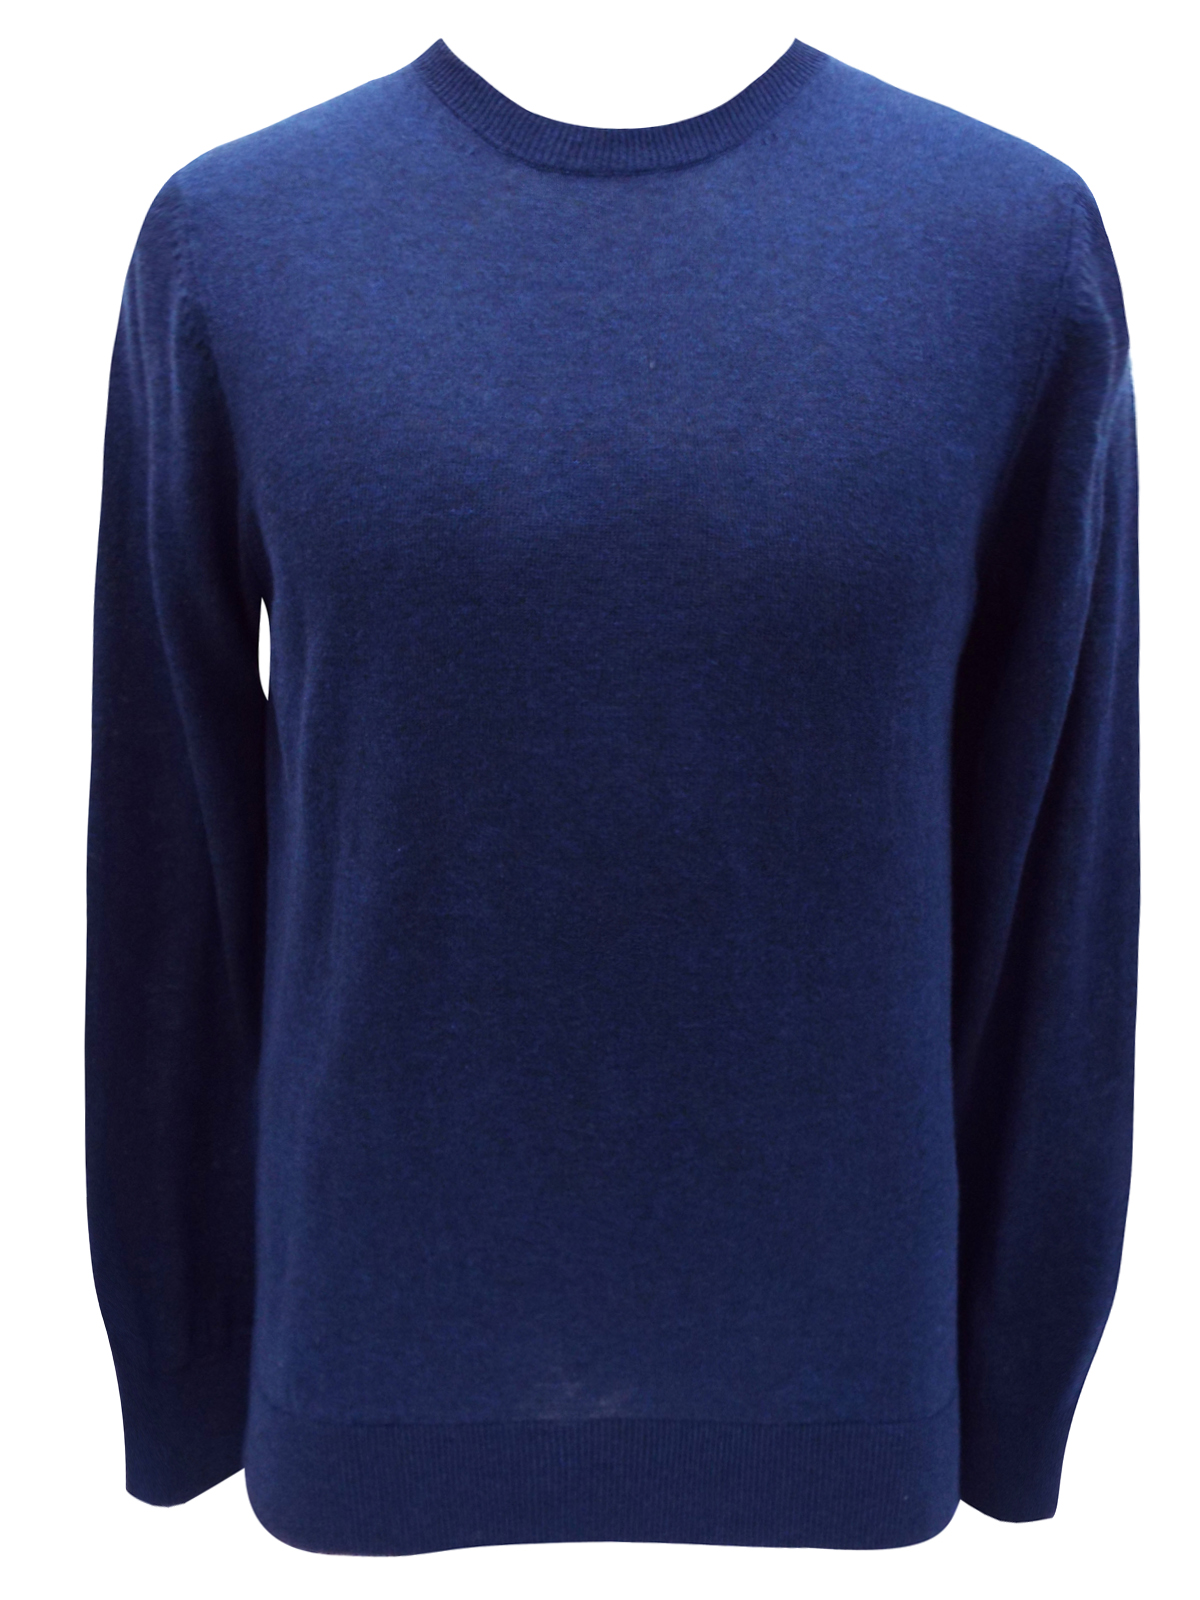 Marks and Spencer - - M&5 BLUE Cotton Blend Jumper - Size Medium to XLarge